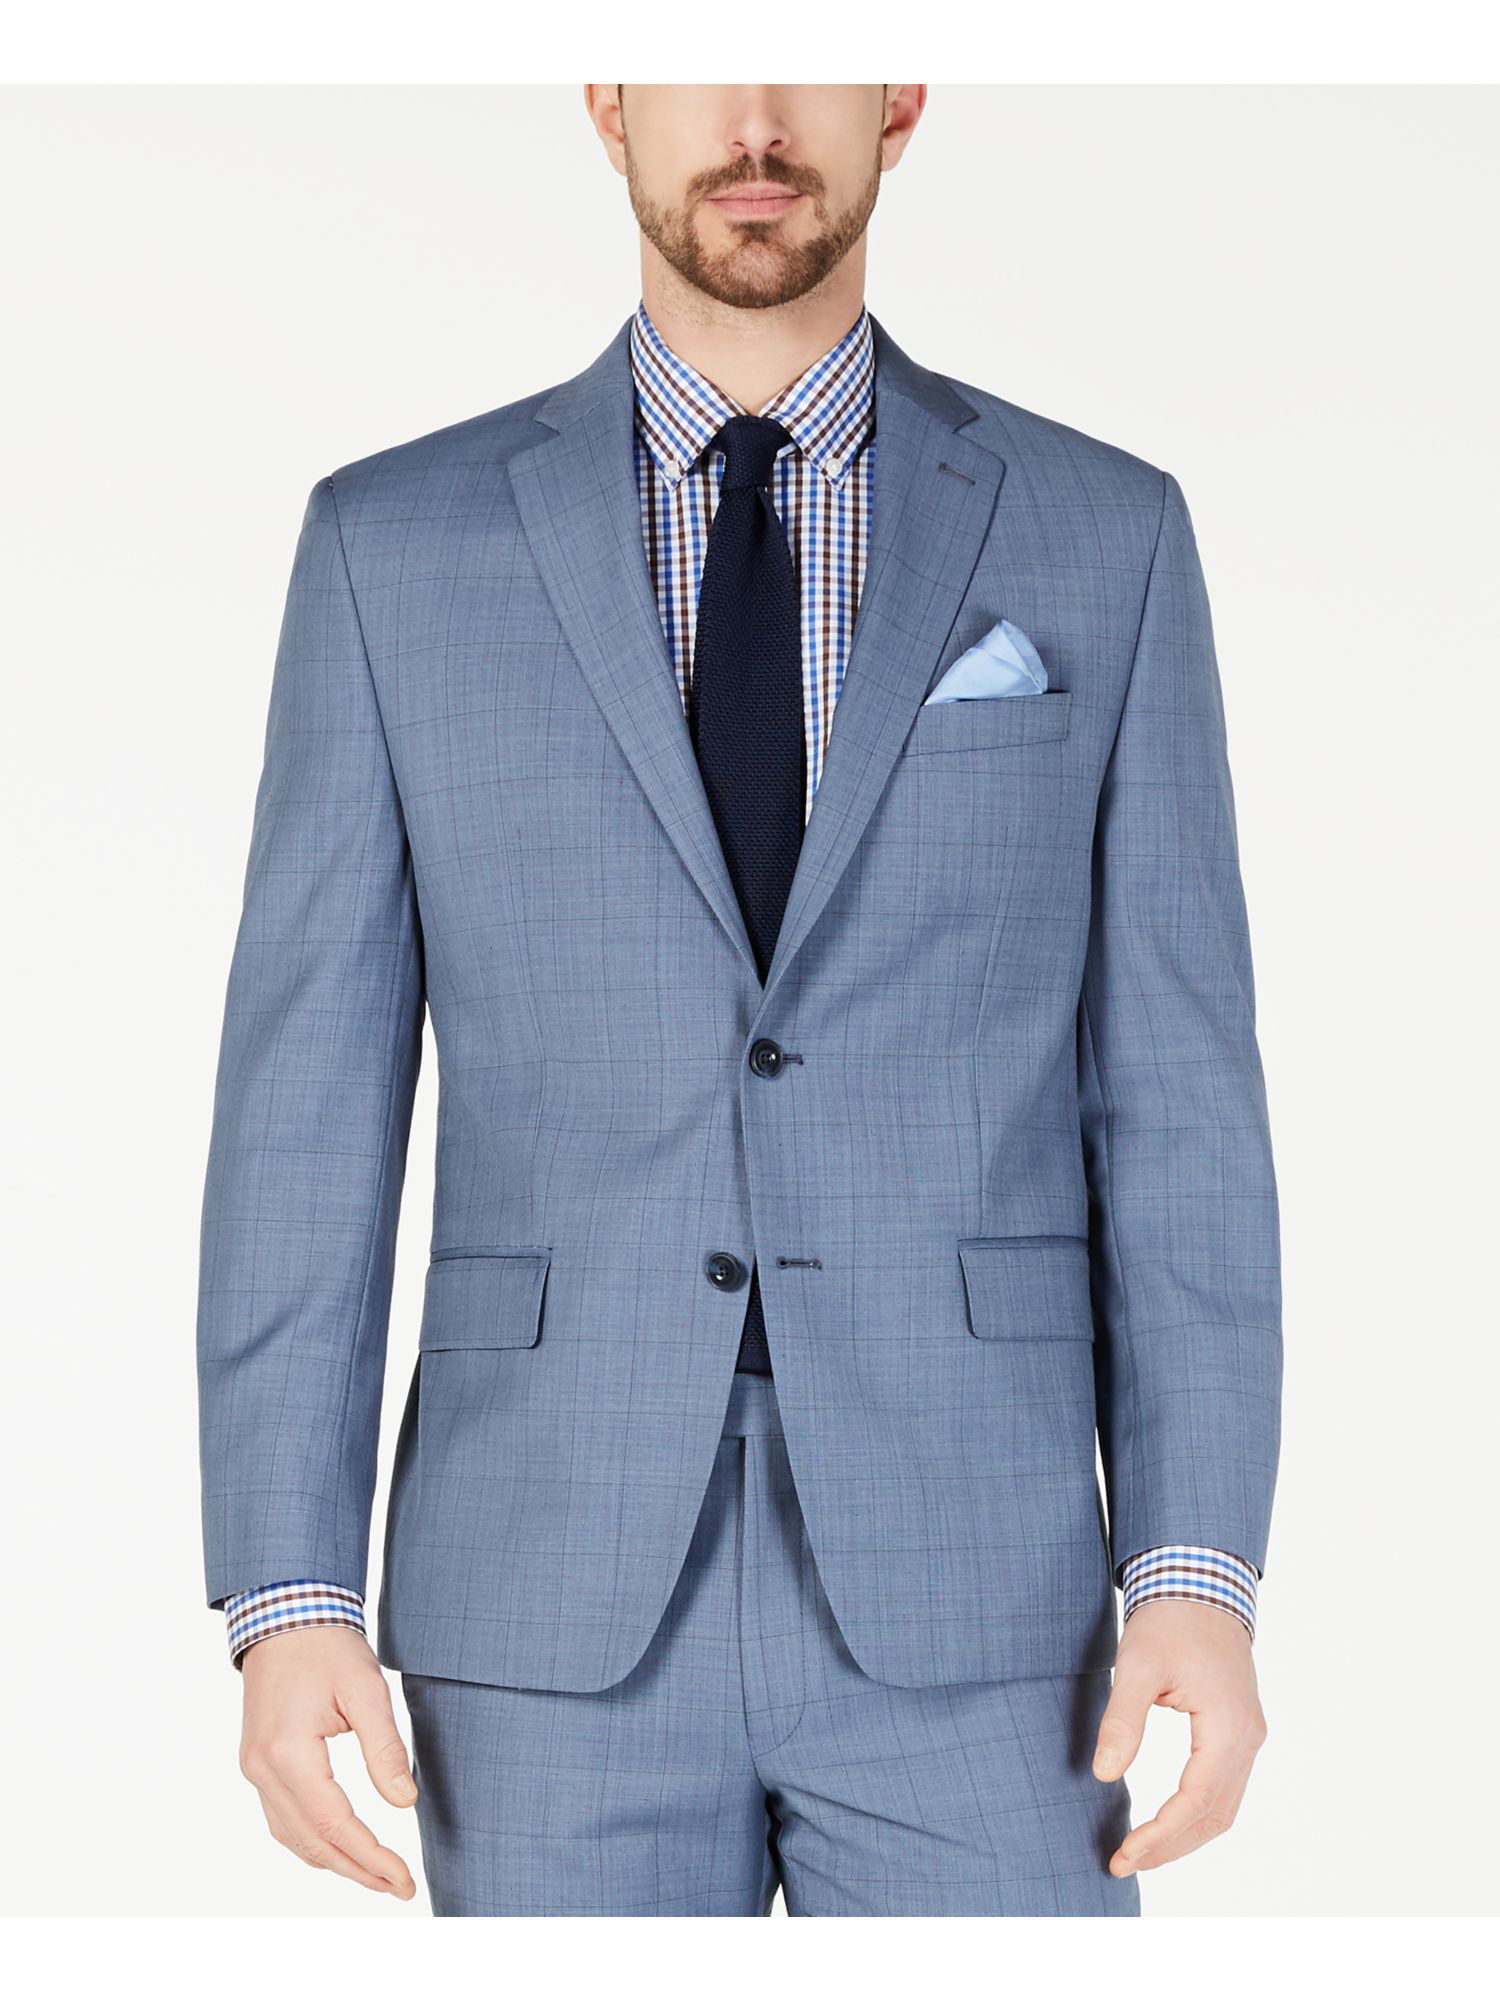 Blue Windowpane Check Jacket Blazer Suit Fabric 180s Quality Wool ...